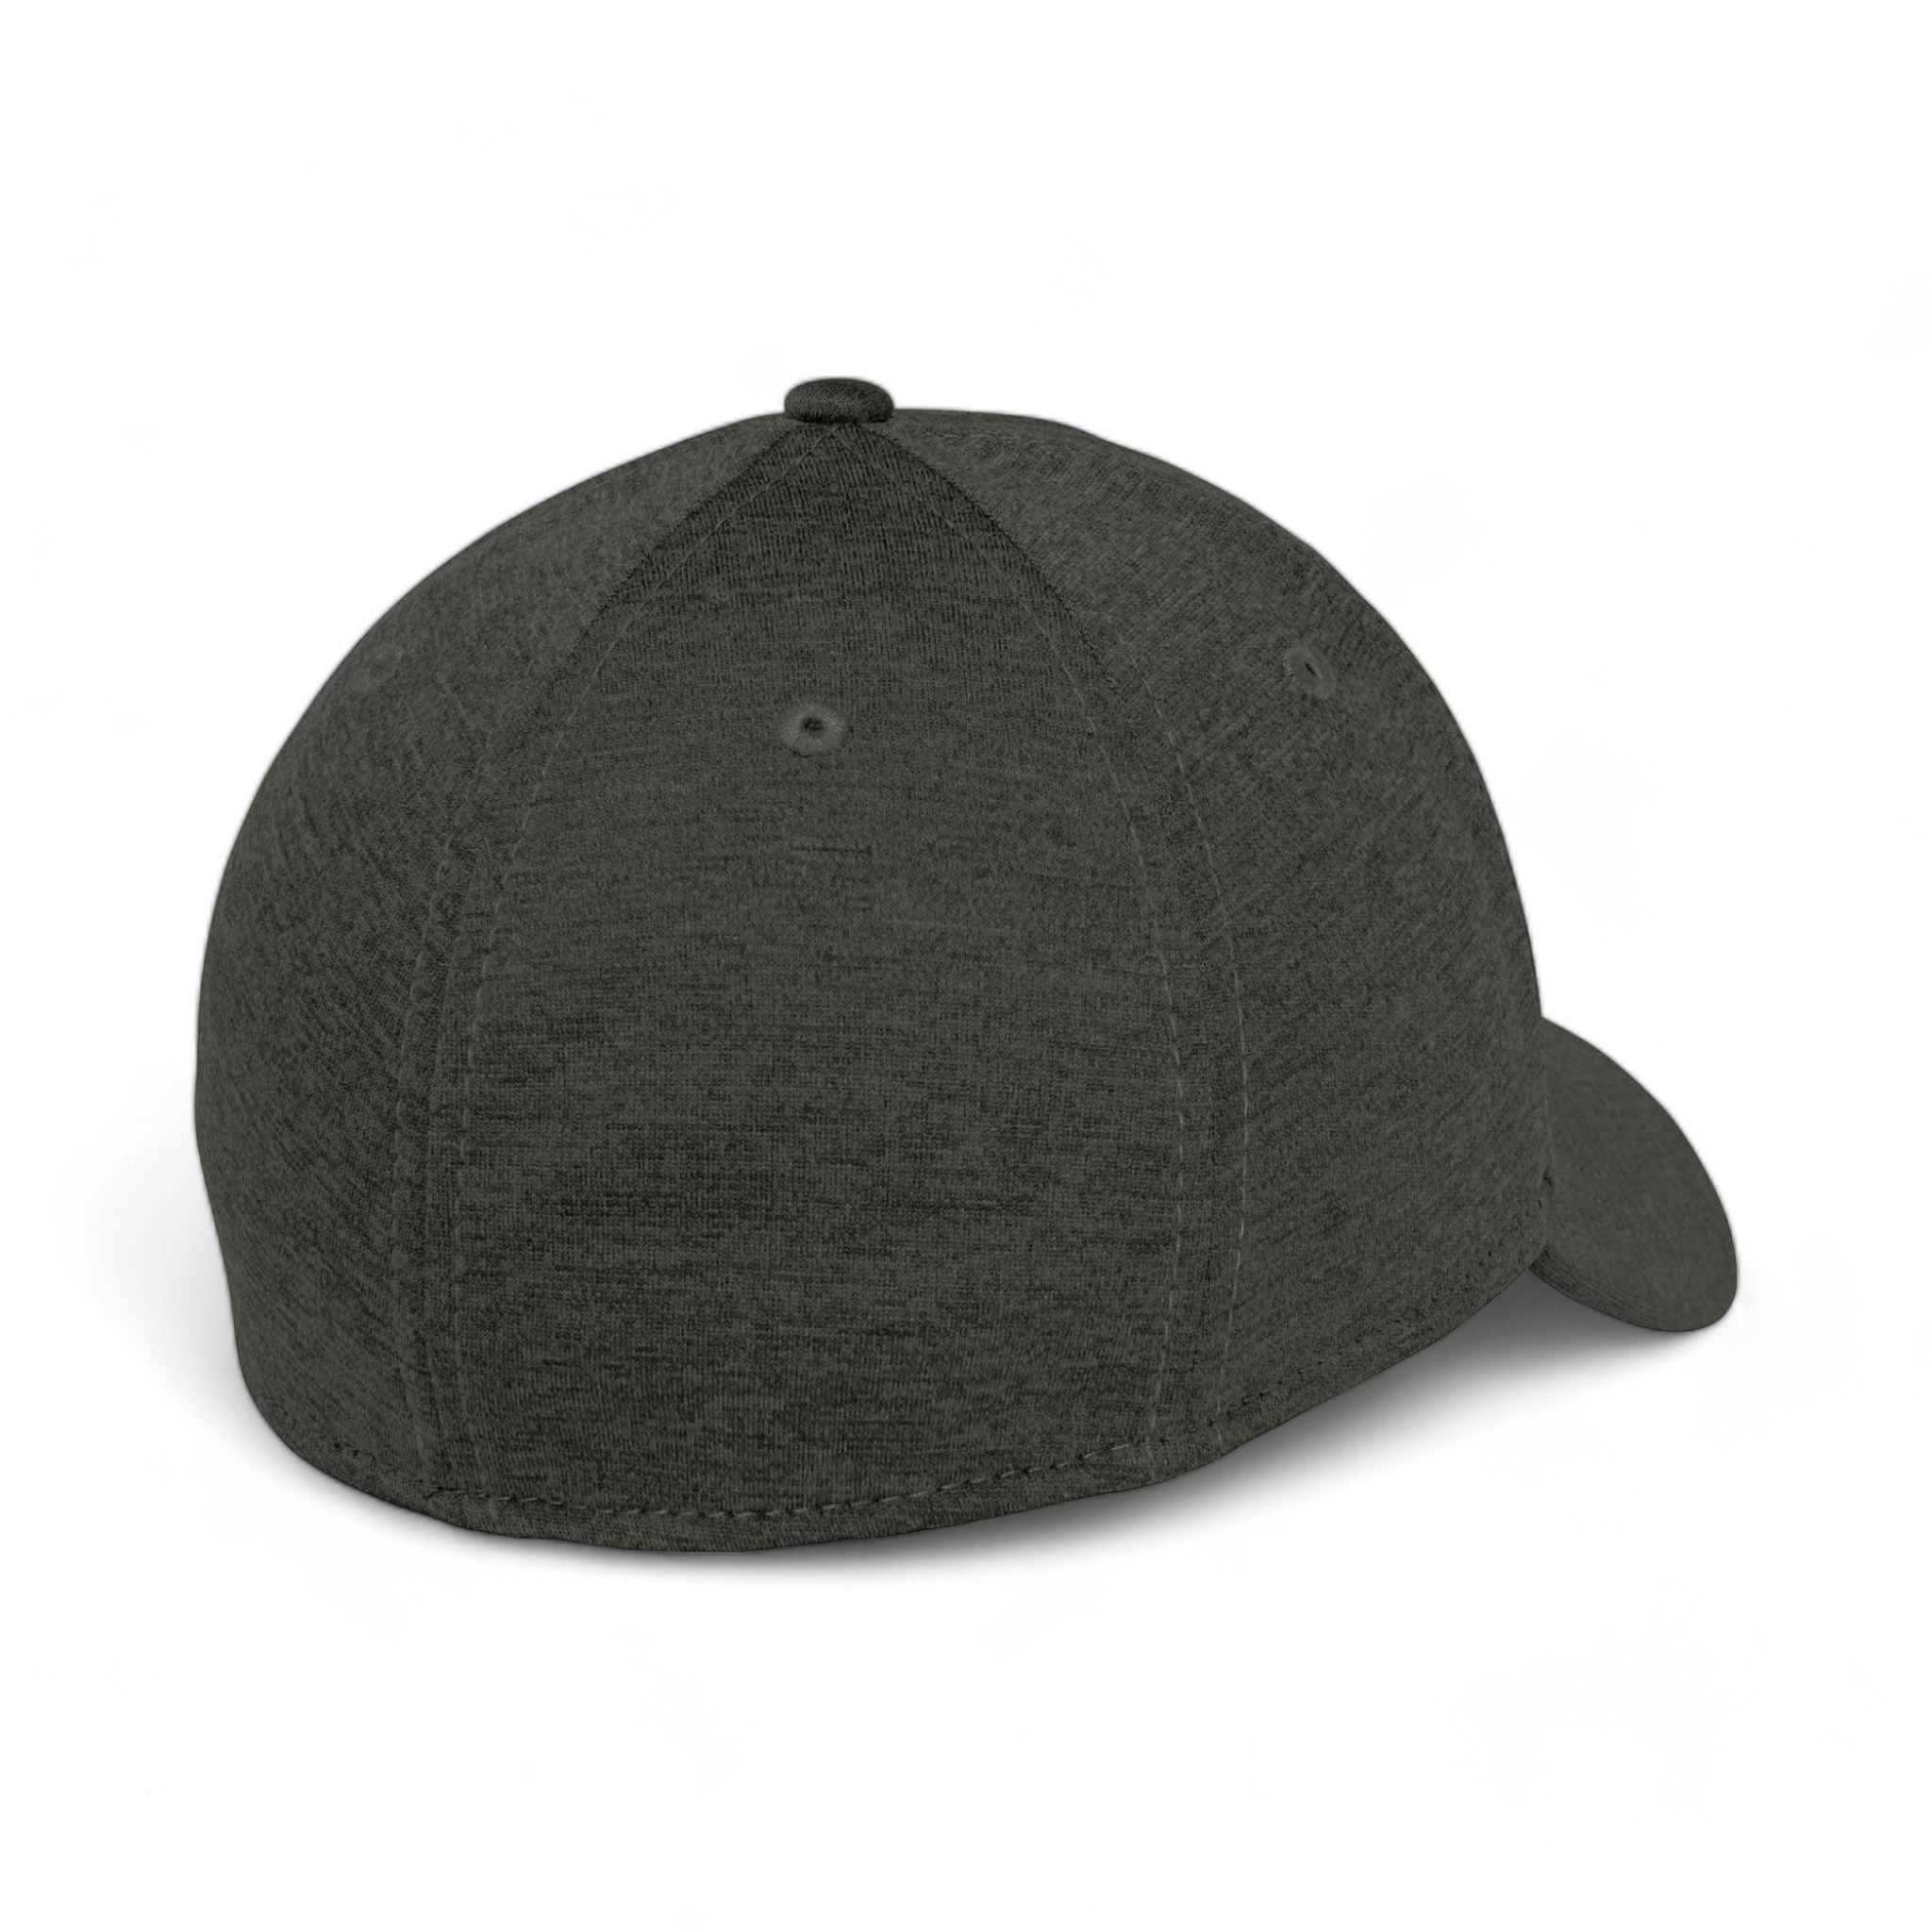 Back view of New Era NE703 custom hat in black shadow heather